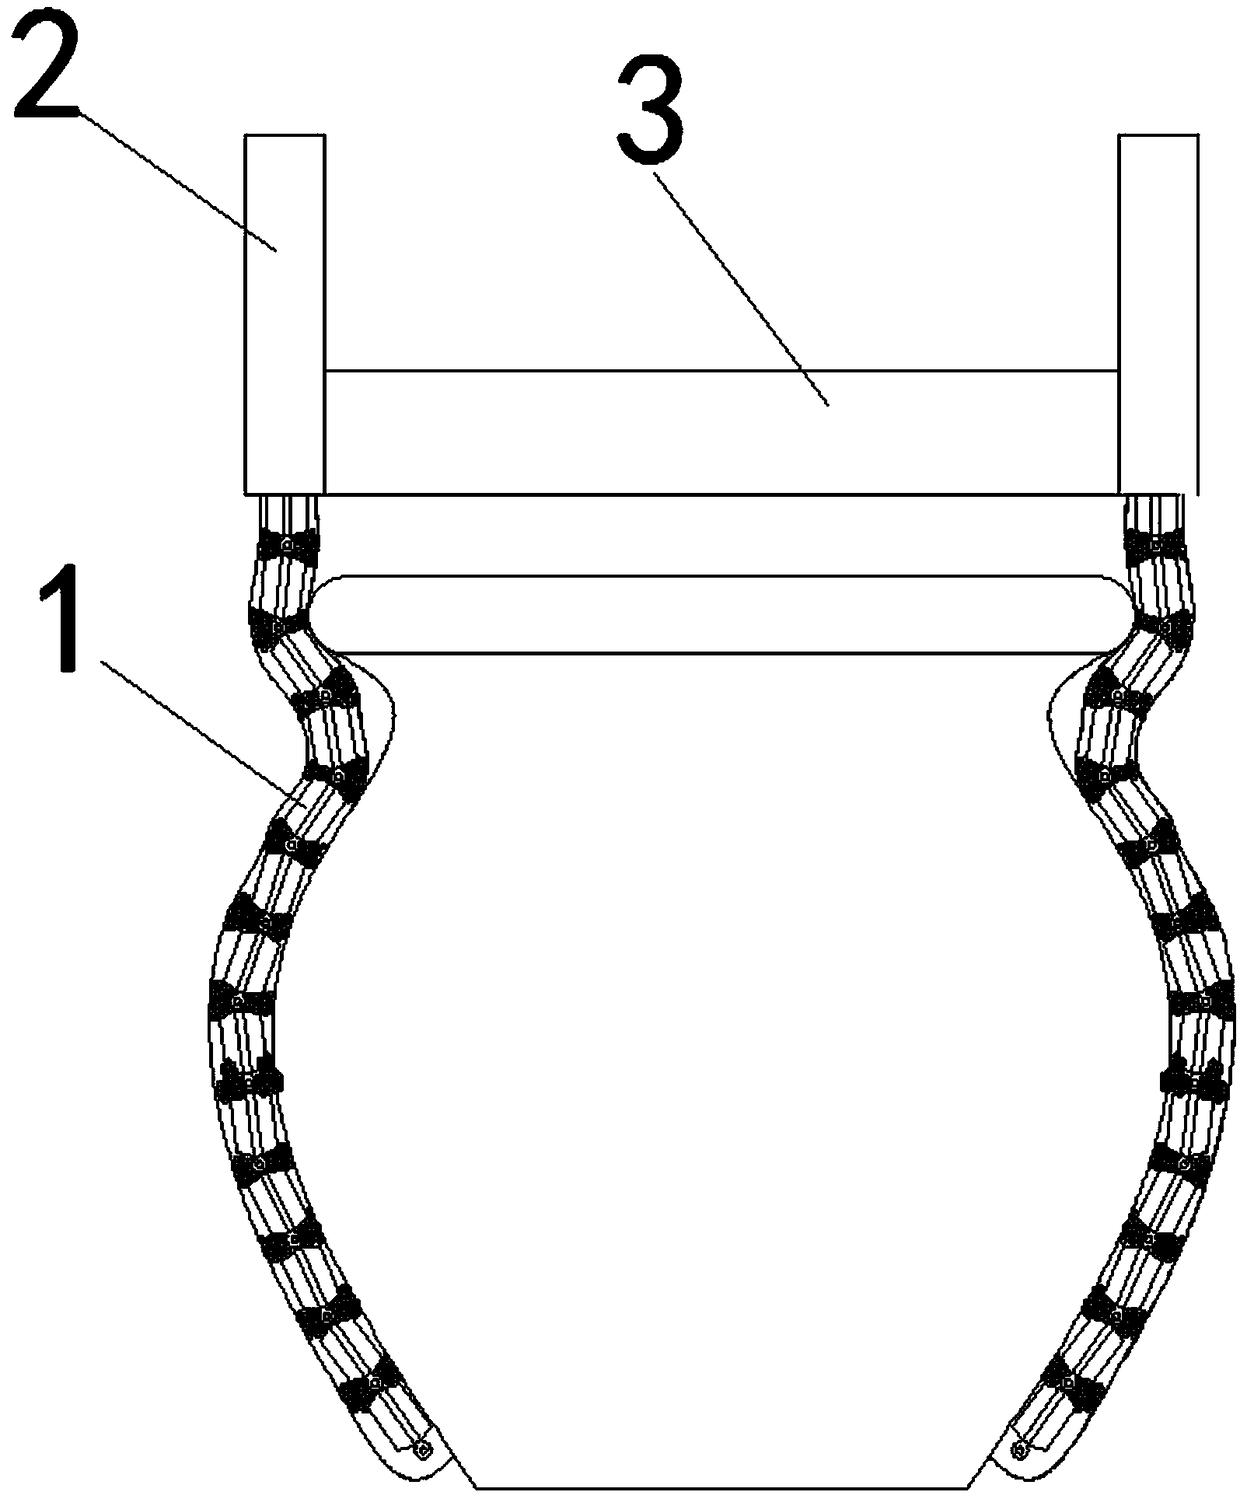 Flexible self-locking manipulator locating method